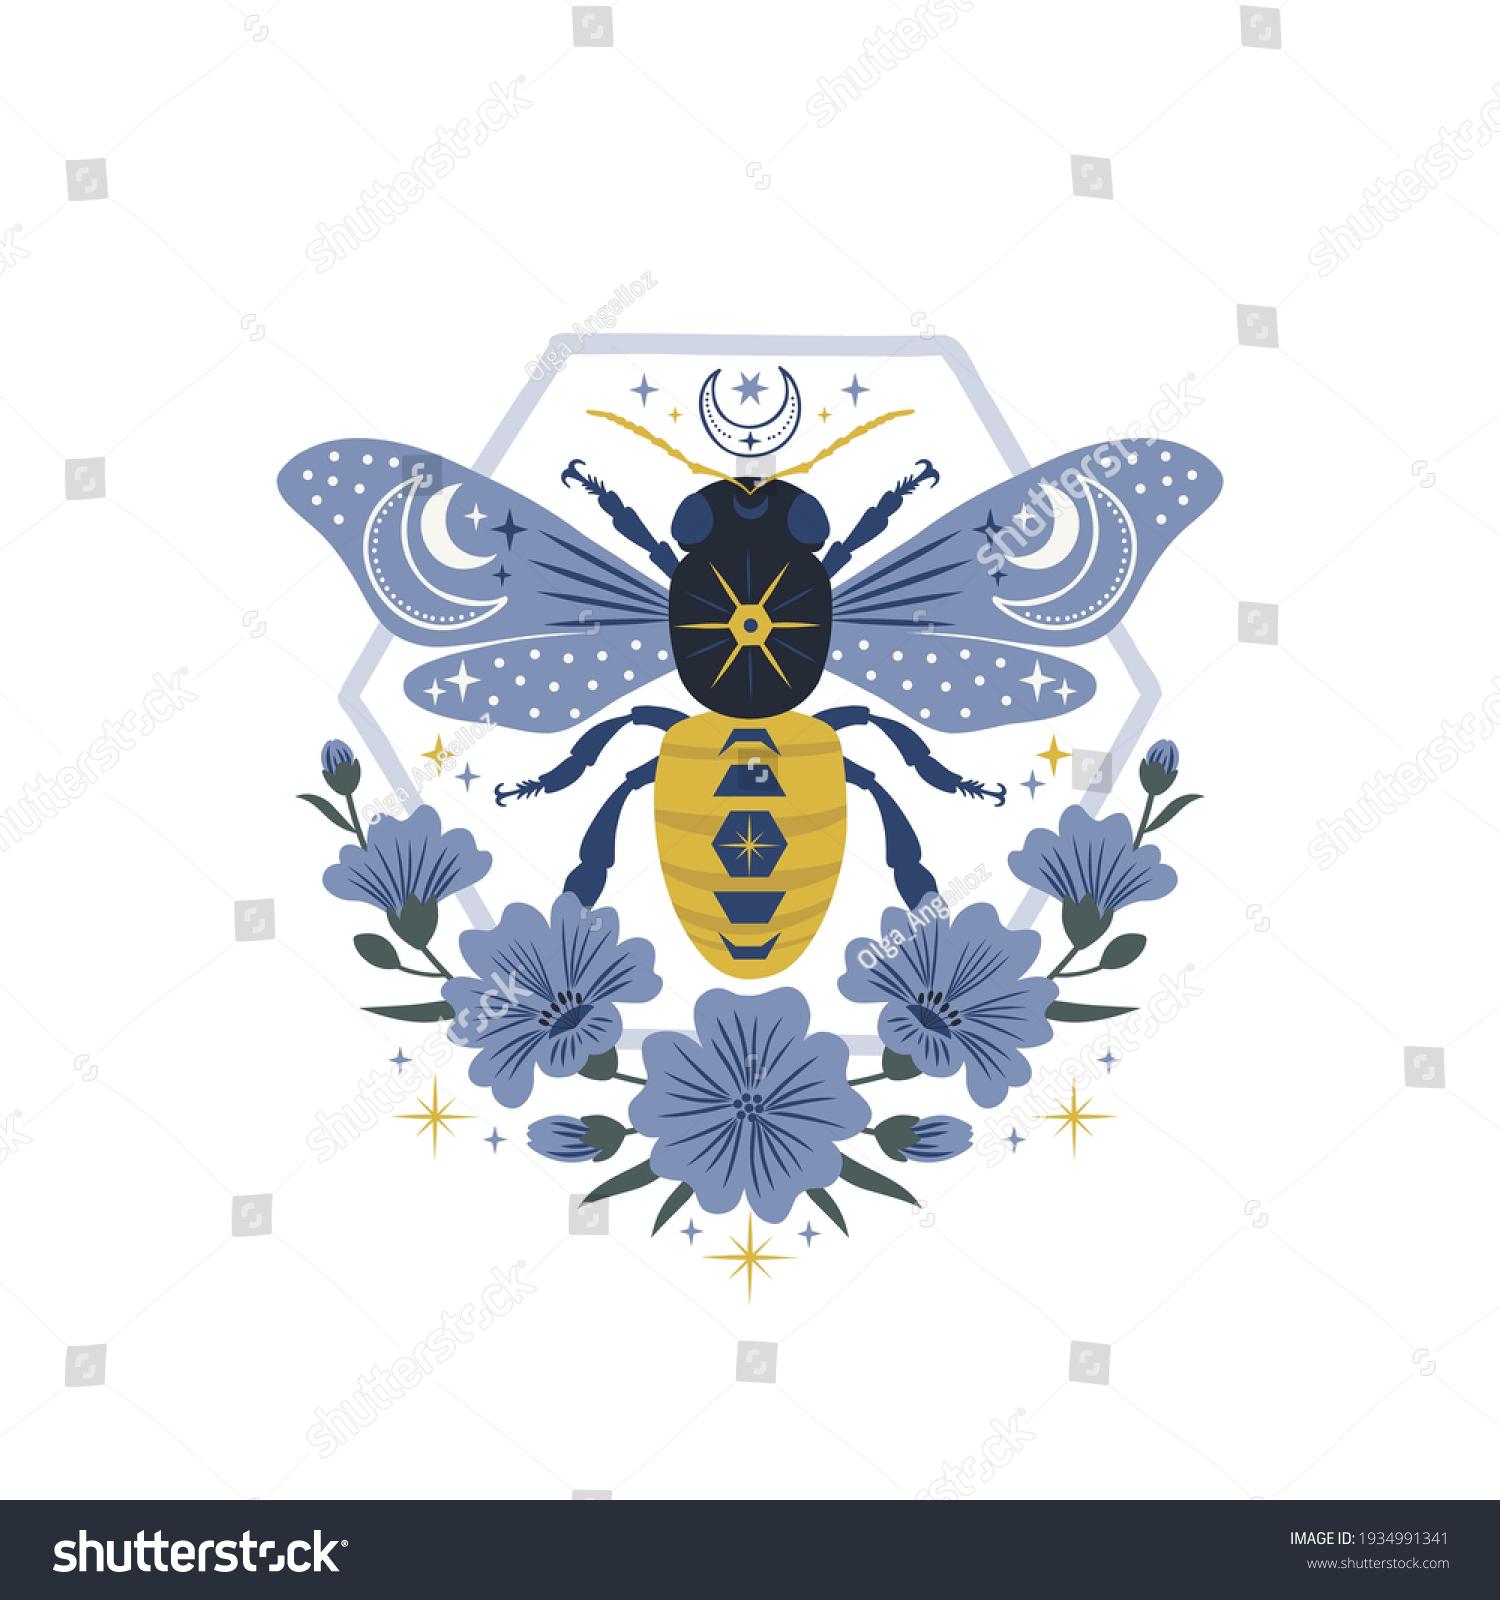 SVG of Ornate cosmic bee with celestial ornament in floral frame vector illustration. Symmetrical honeybee folk art emblem. Apiculture decorative folksy ornament.  svg